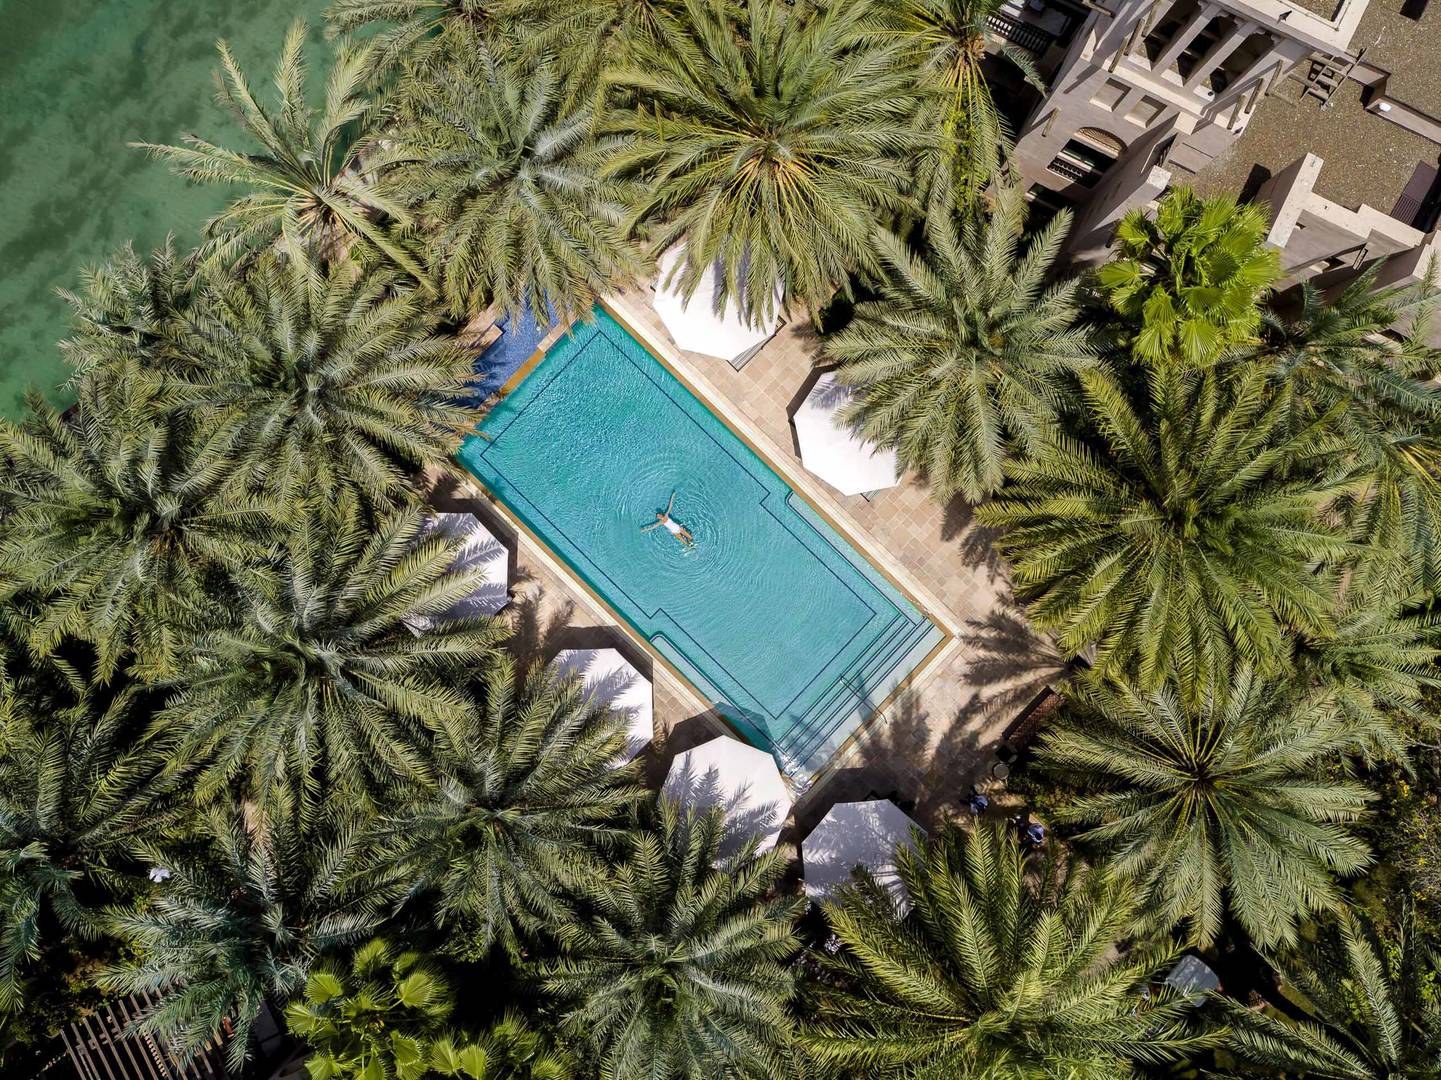 The pool in a courtyard at Jumeirah Dar Al Masyaf